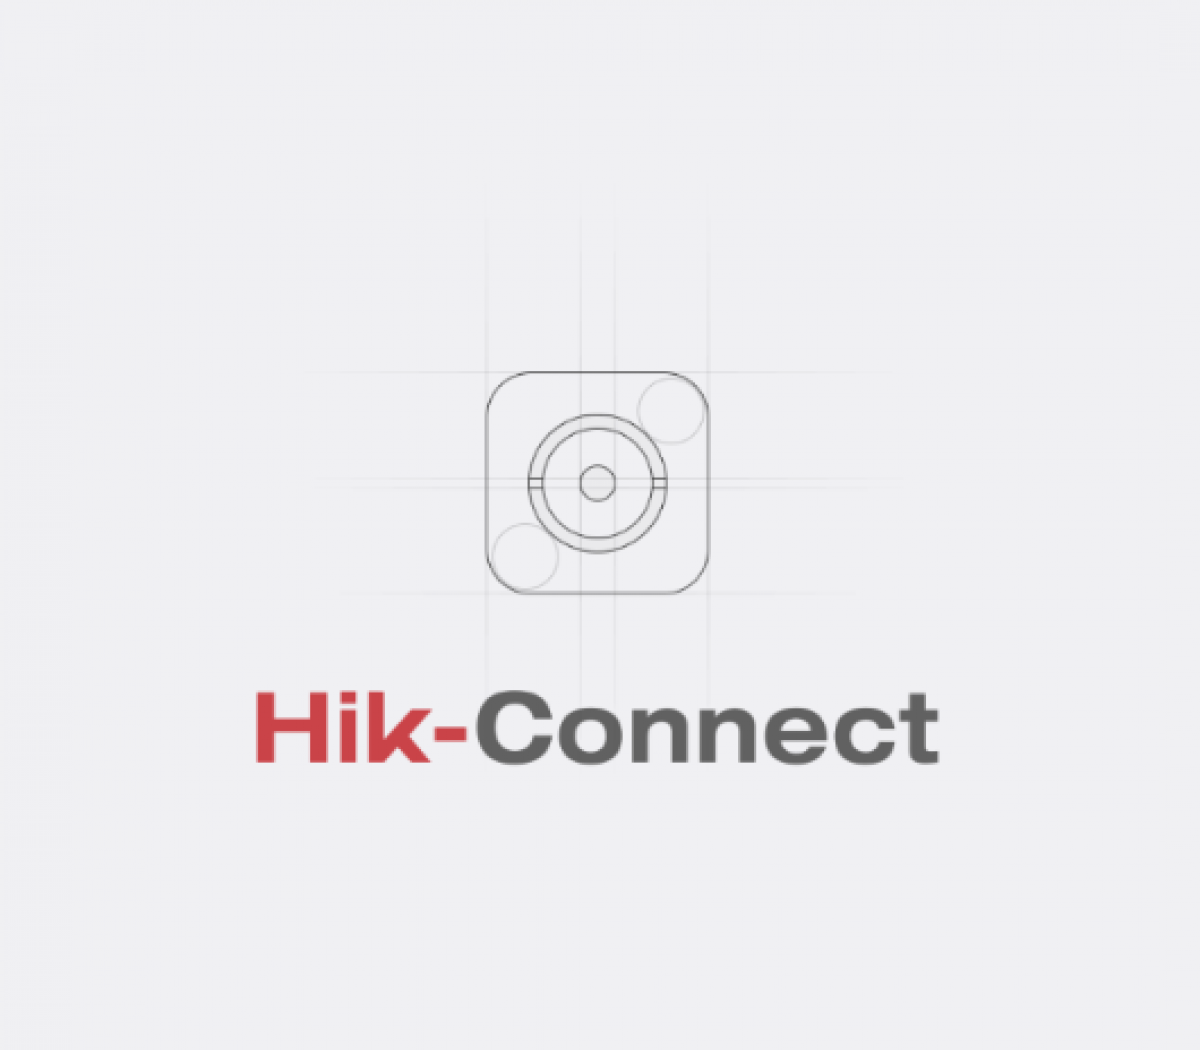 hik connect app windows 10